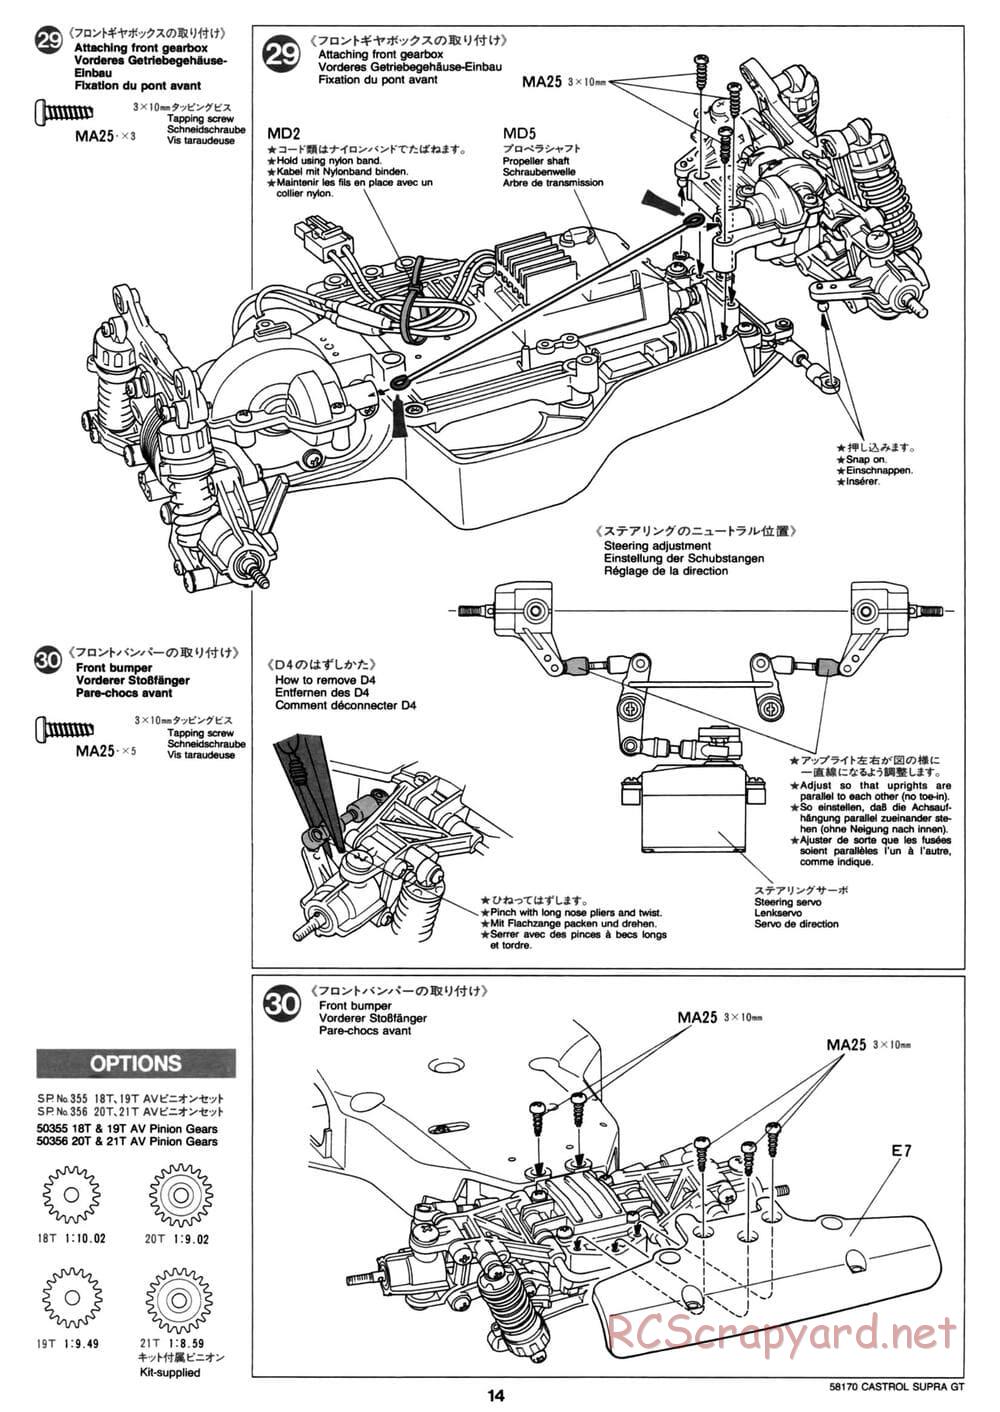 Tamiya - Castrol Toyota Tom's Supra GT - TA-02W Chassis - Manual - Page 14